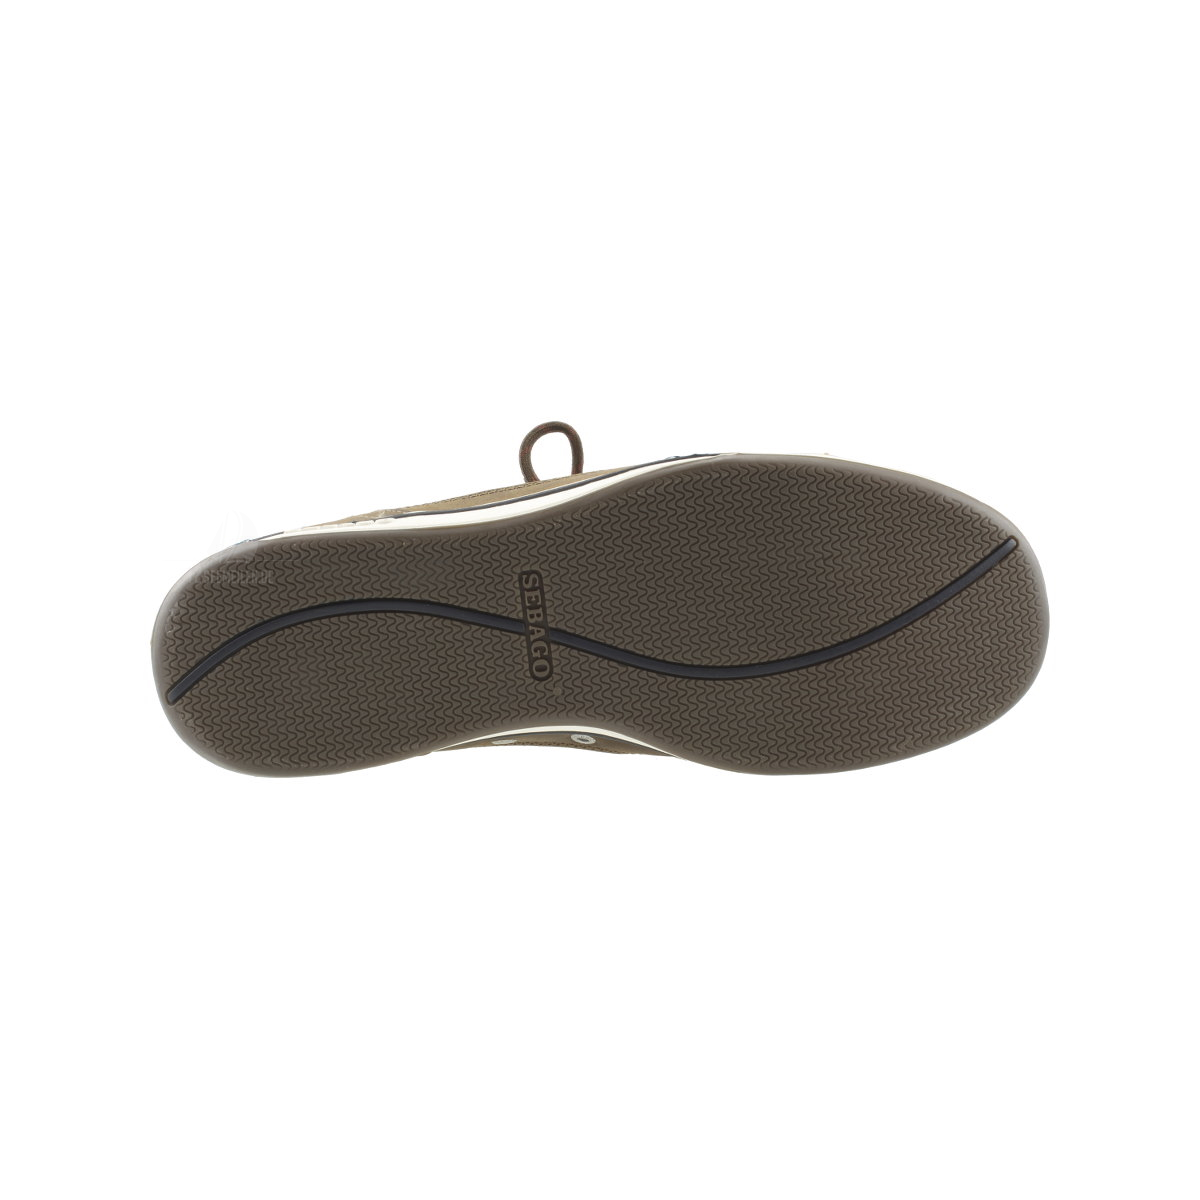 Sebago Triton Three-Eye chaussures bateau homme walnut leather, taille EU 46,5 (US 12)